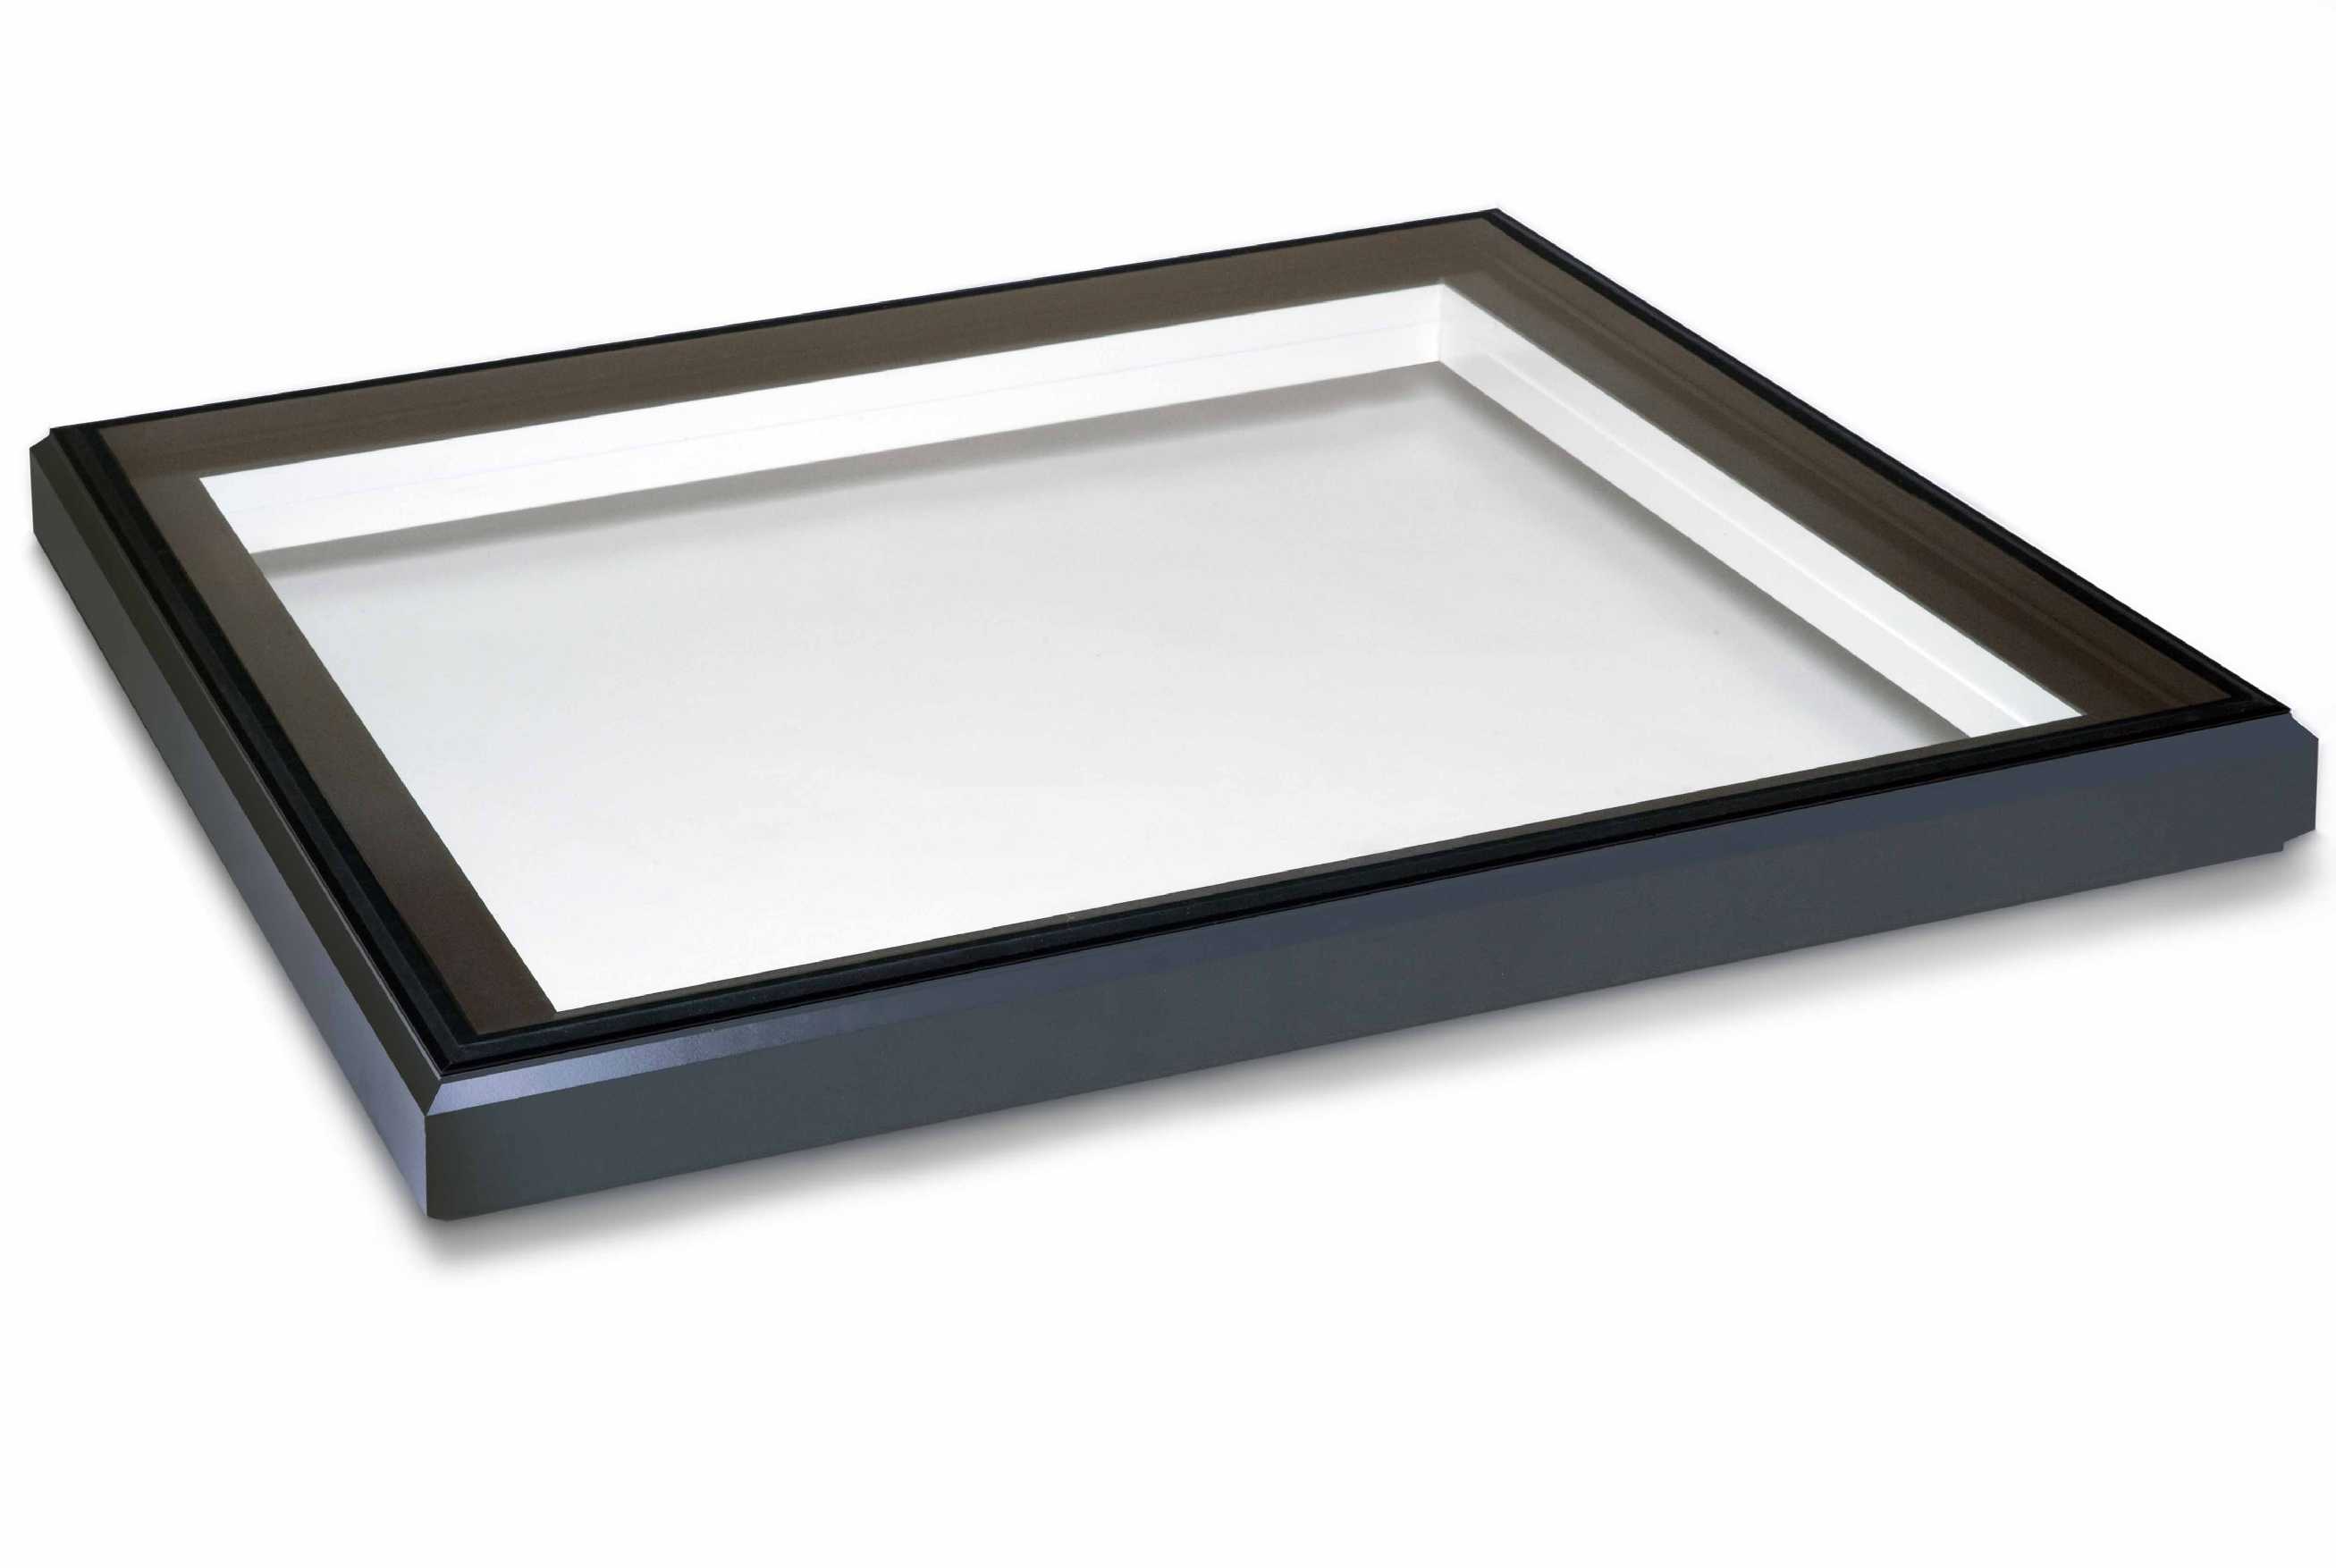 Buy EcoGard FlatRoof light, Triple Glazed, Fixed, 1,000mm x 1,000mm online today